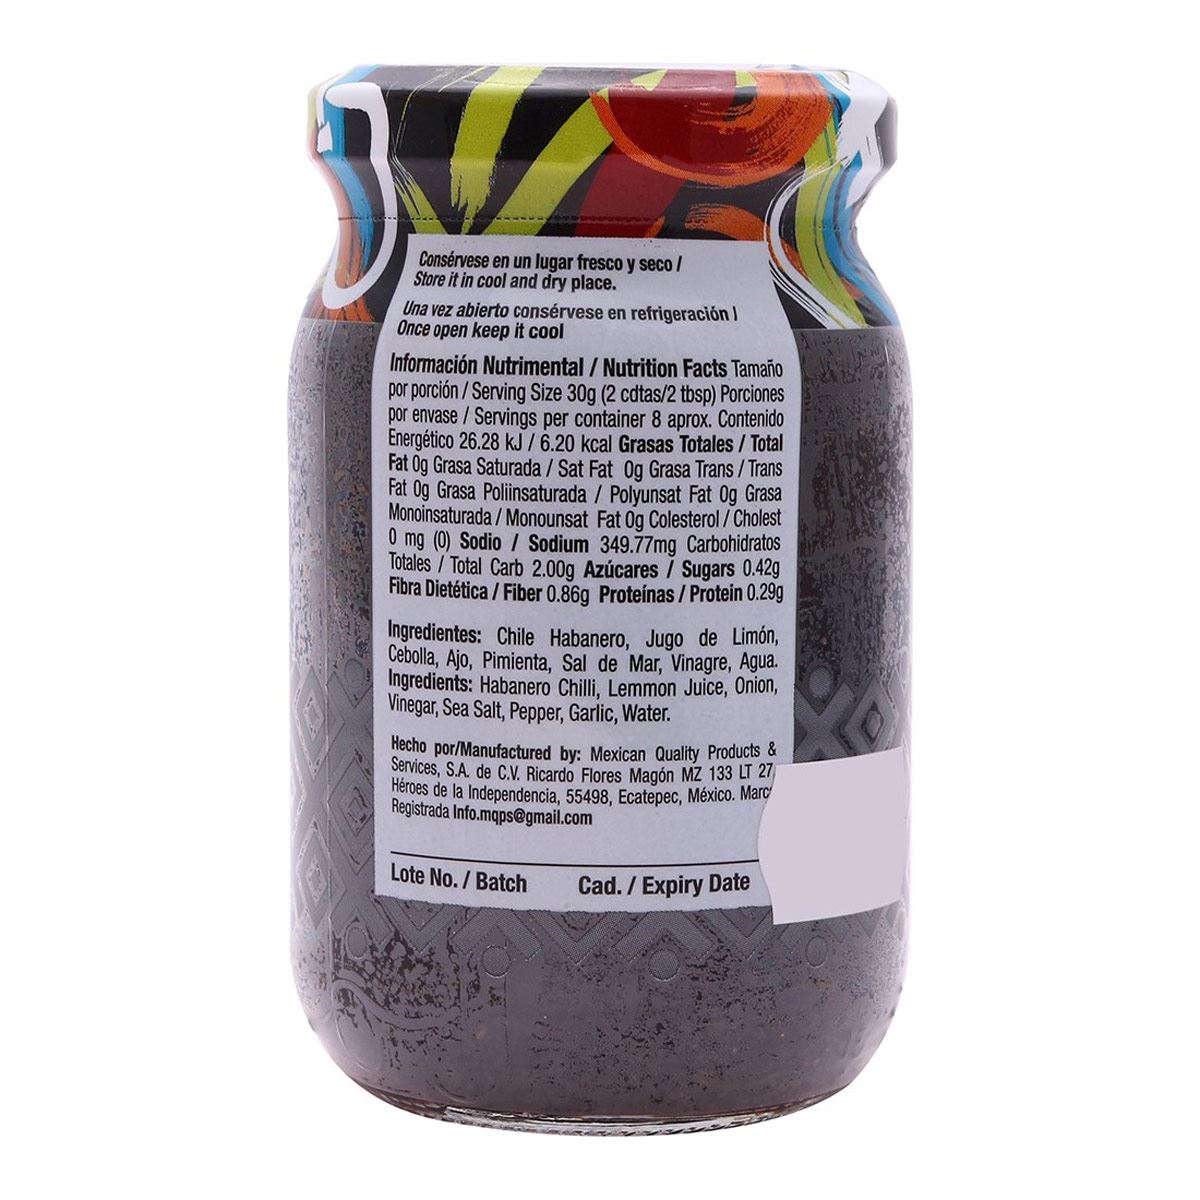 Salsa Negra de Habanero 235 gramos Eki